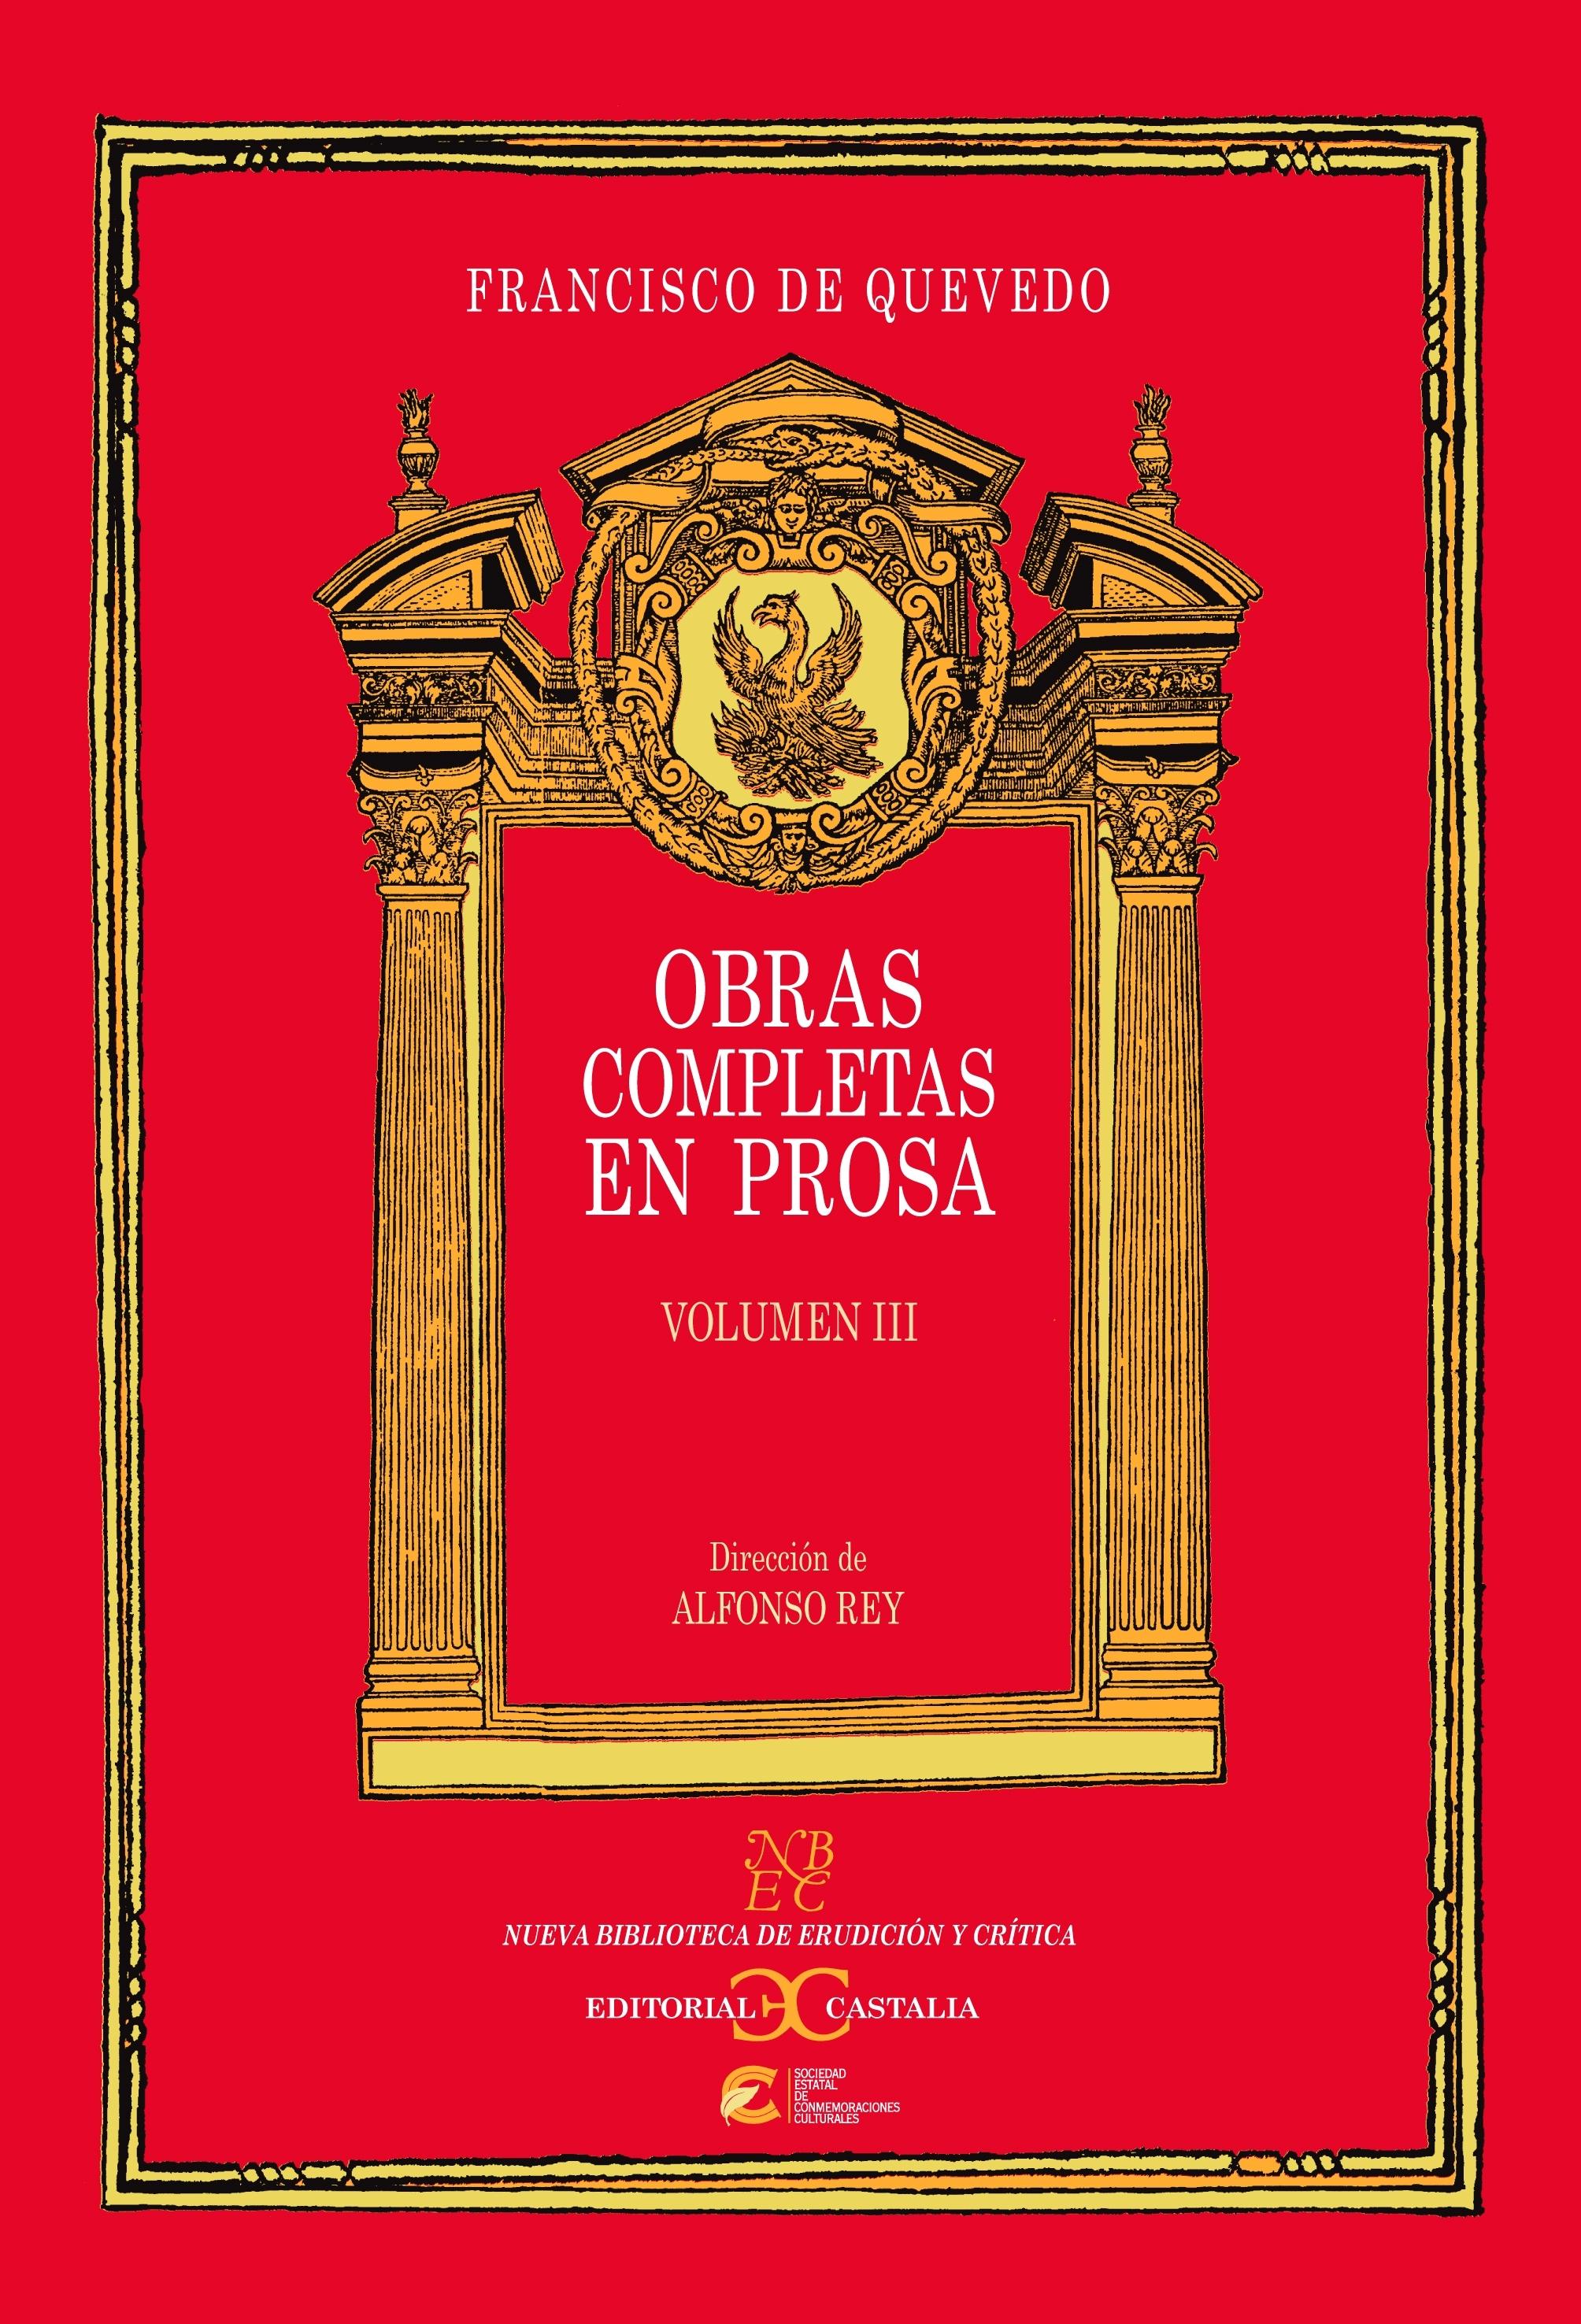 Obras completas en prosa - Volumen 3 "(Francisco de Quevedo)"